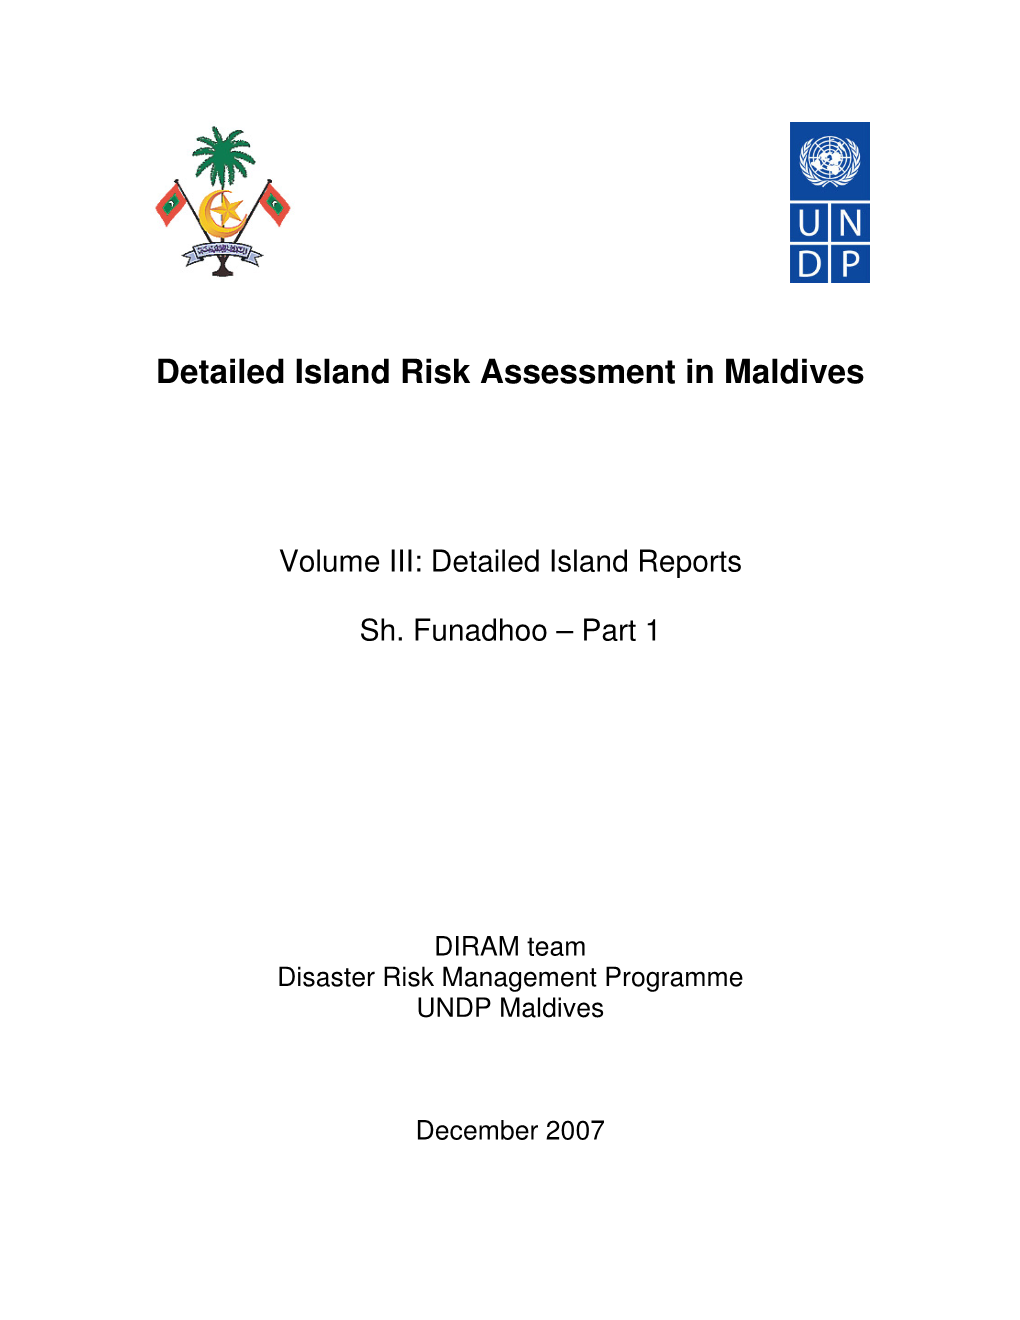 Detailed Island Risk Assessment in Maldives, Sh. Funadhoo